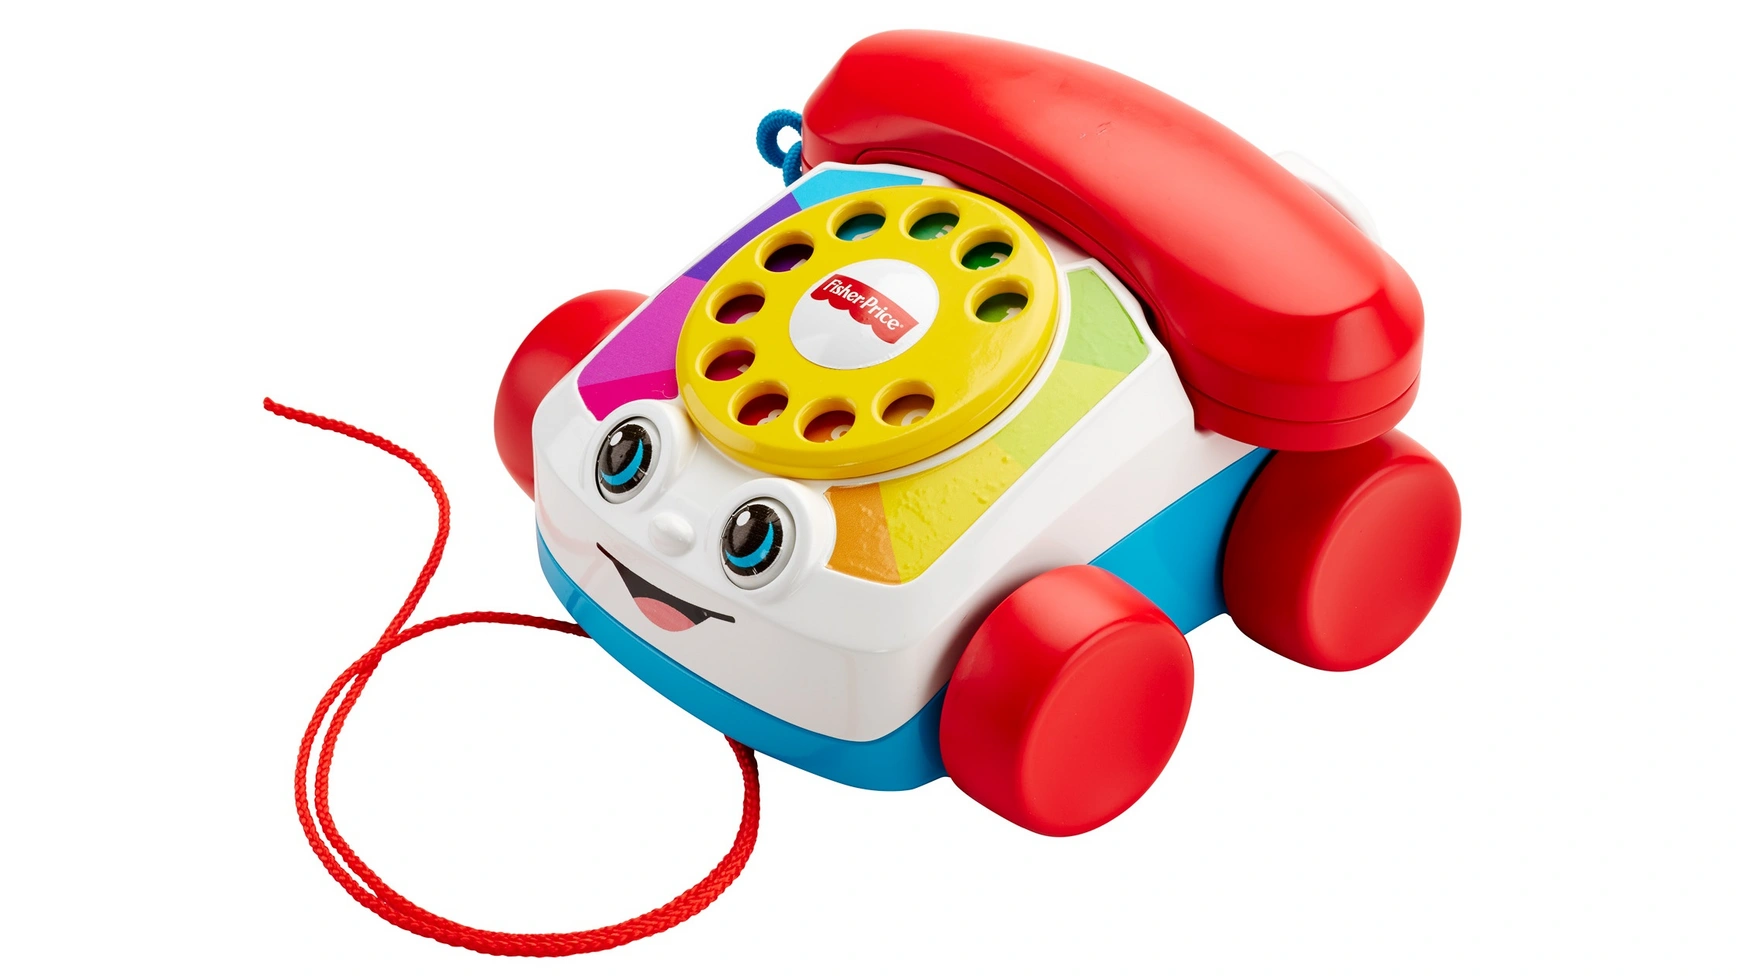 babbling telephone fisher price детский игрушечный телефон игрушка коляска игрушка коляска Babbling Telephone Fisher Price, Детский игрушечный телефон, Игрушка-коляска, Игрушка-коляска